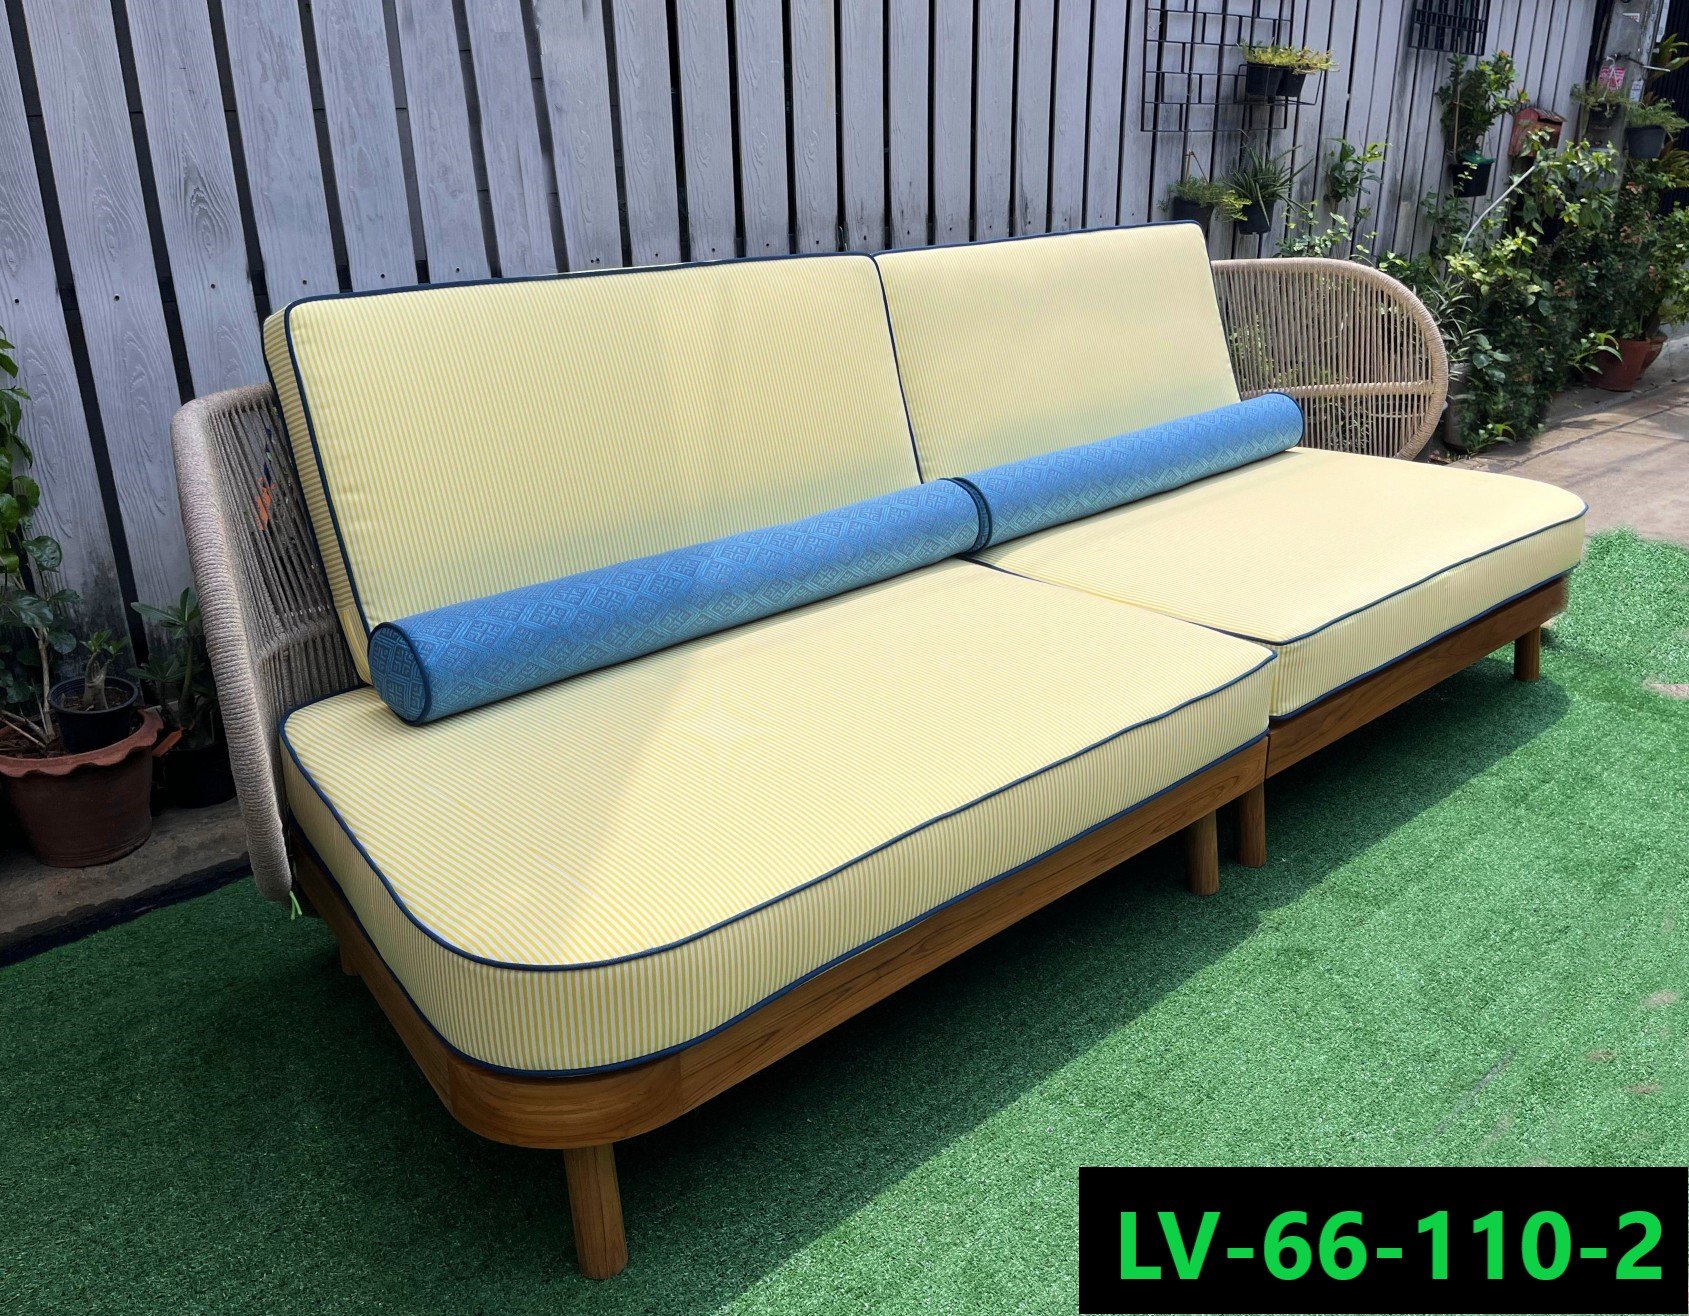 Rattan Sofa set Product code LV-66-110-2